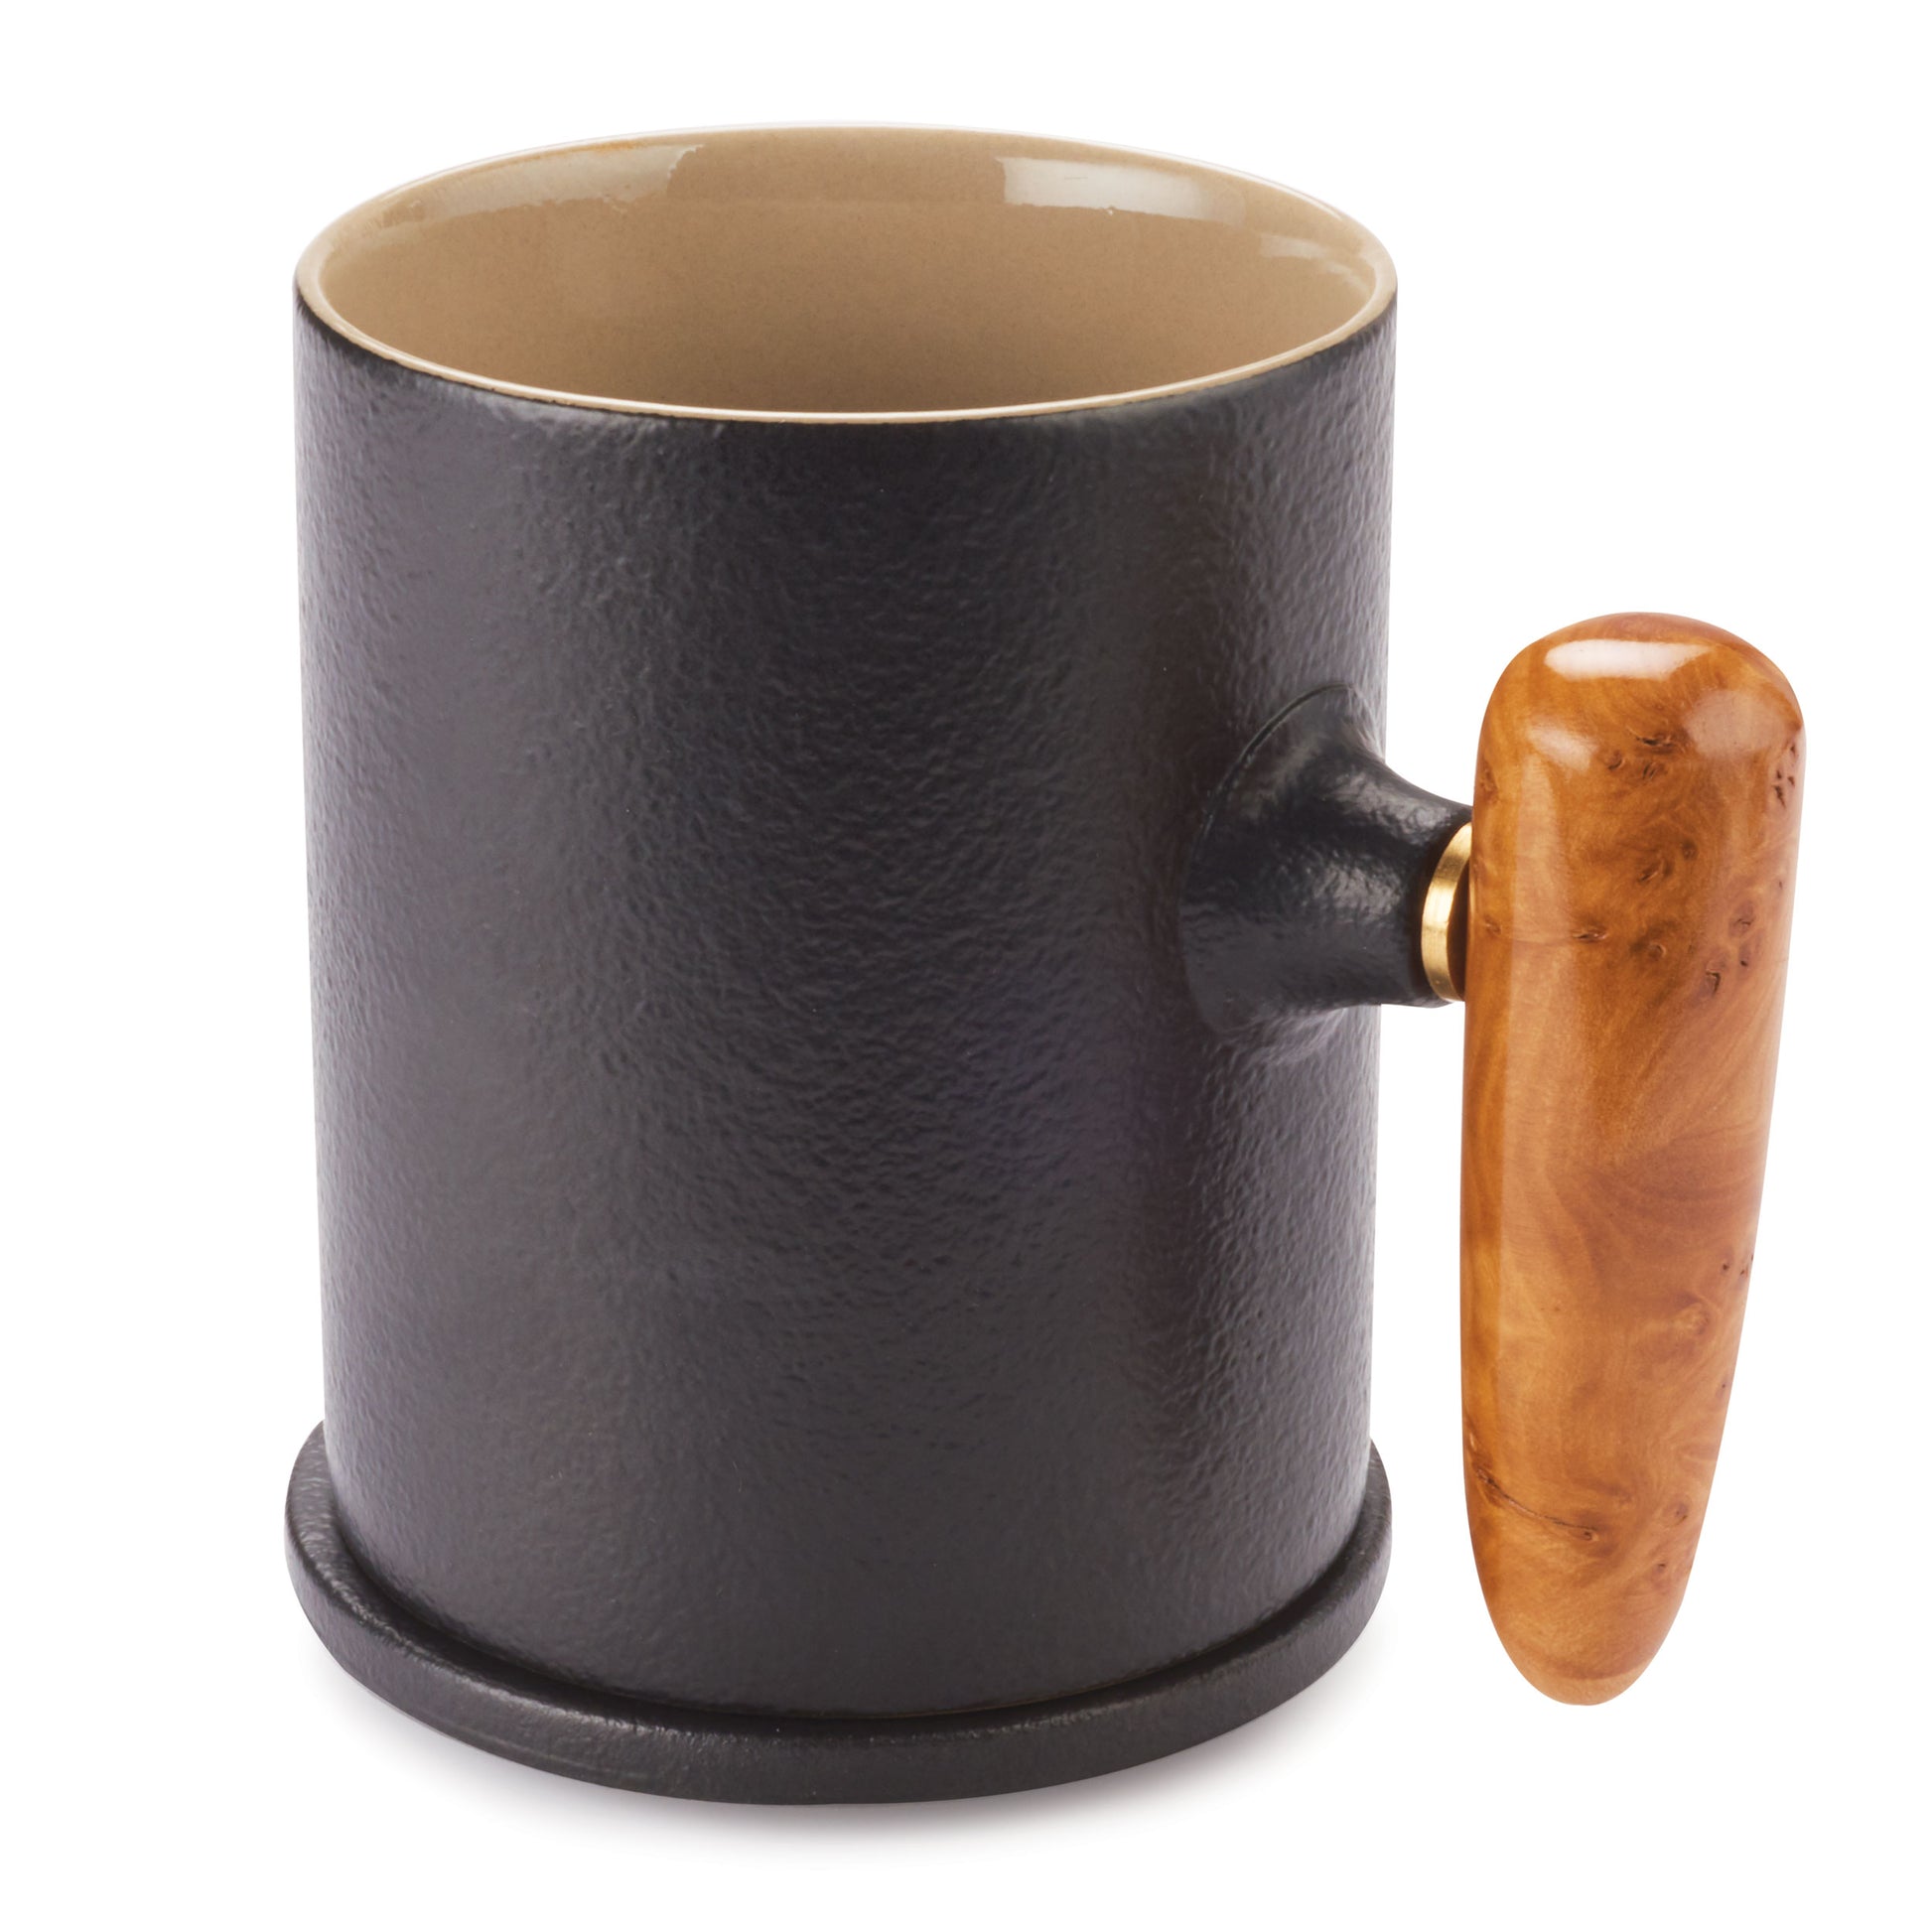 Cast Tan Coffee Mug